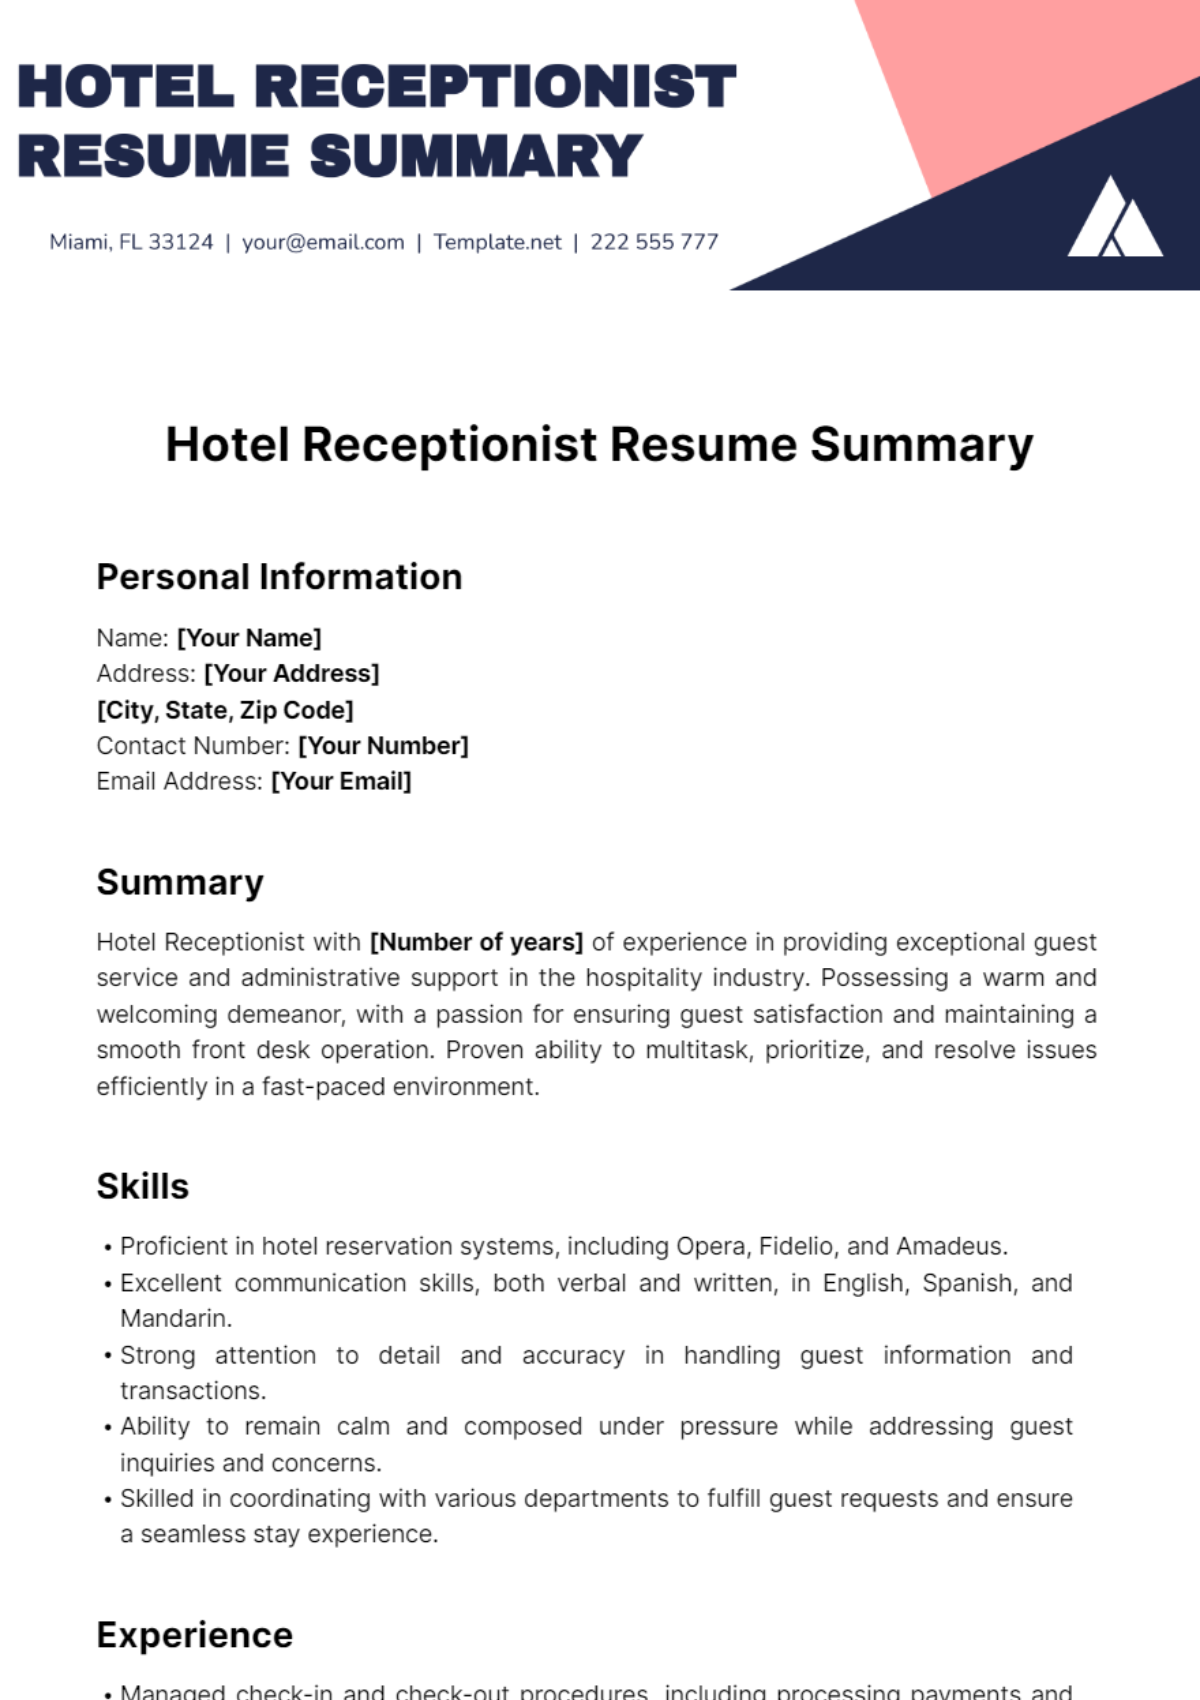 Hotel Receptionist Resume Summary Template